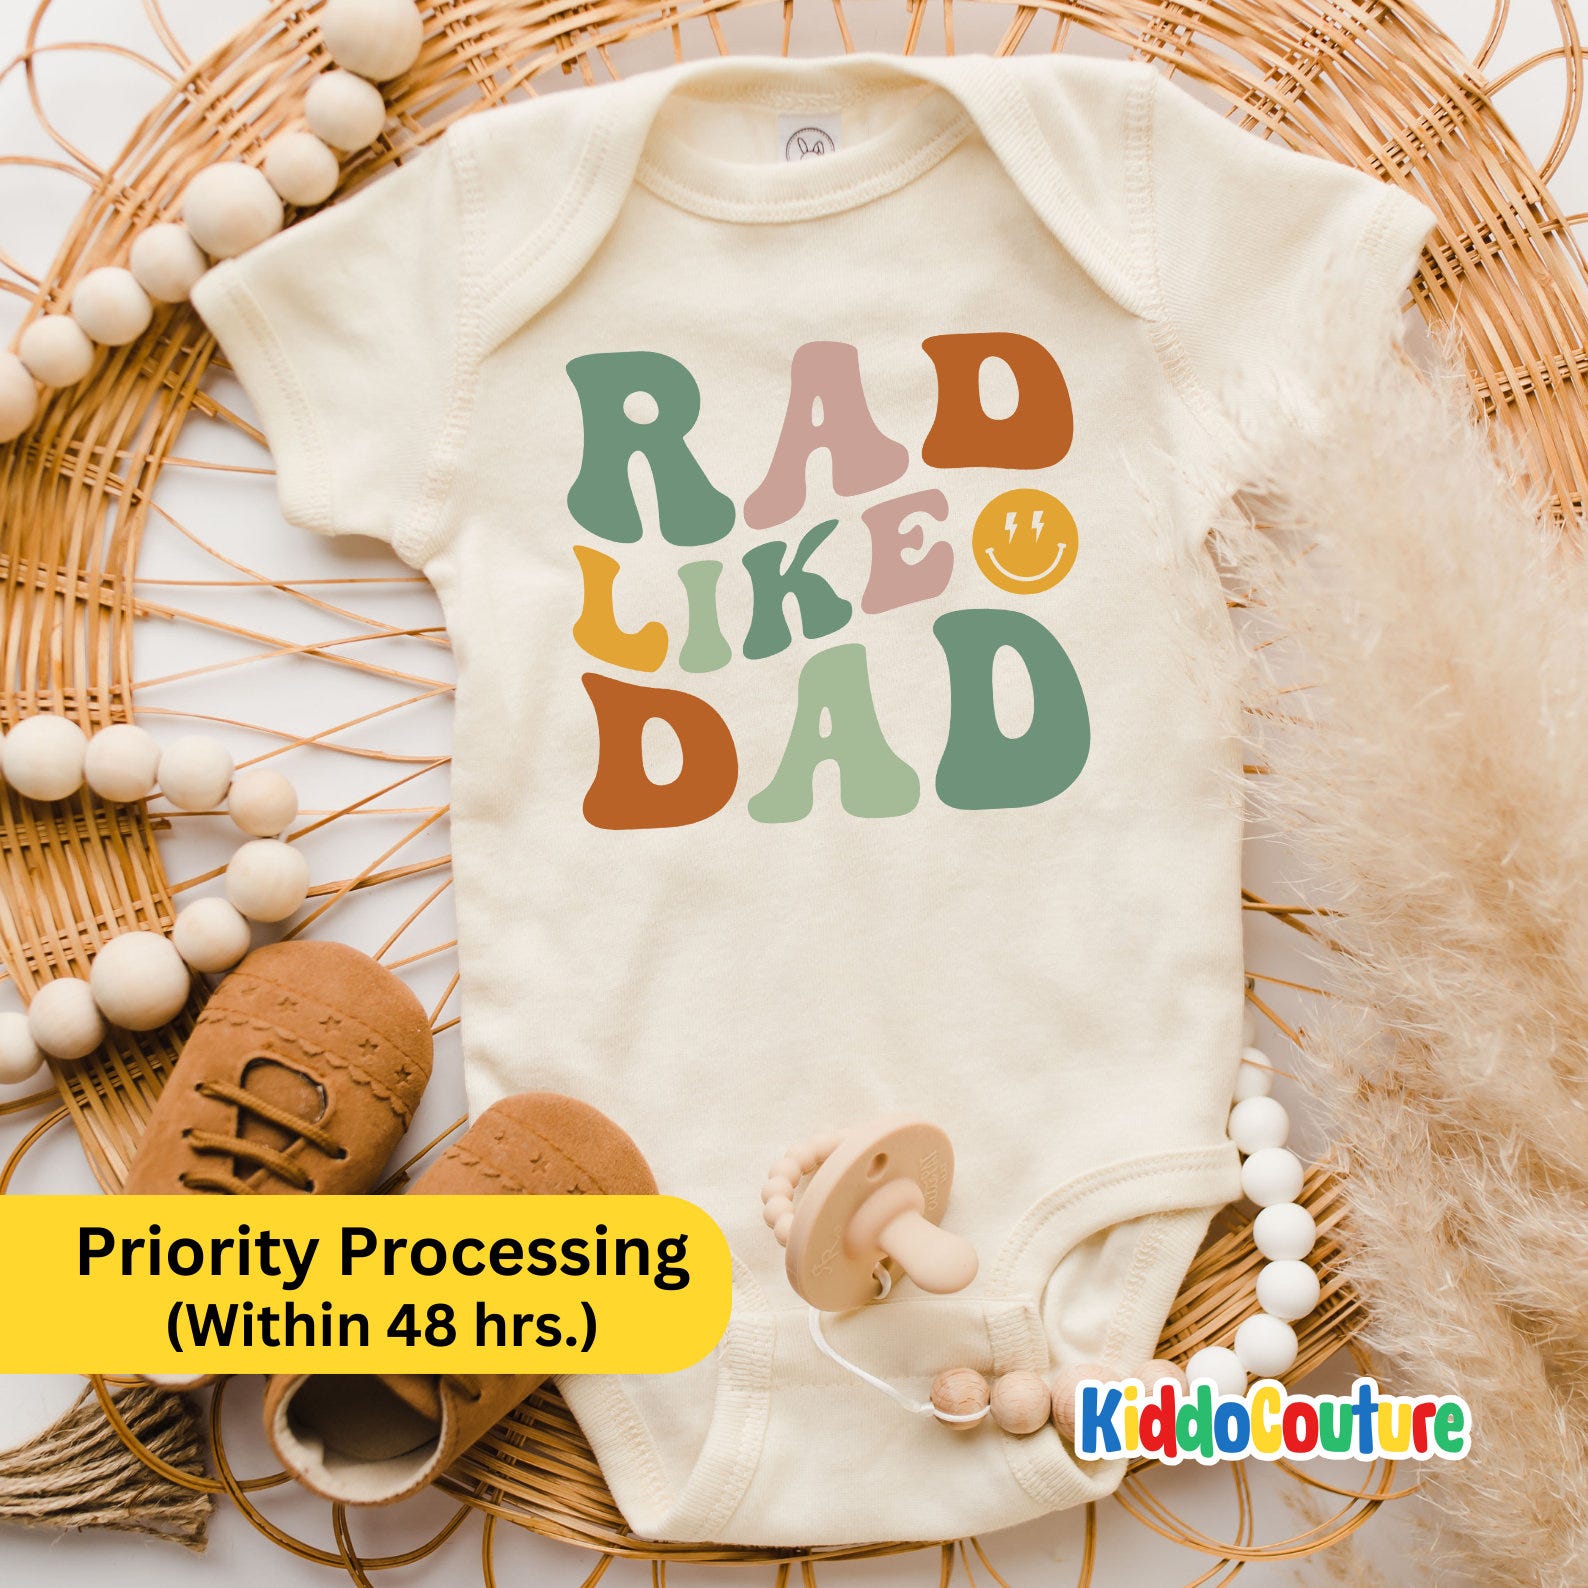 Rad Like Dad Onesie®, Dad Baby Bodysuit, New Born Baby Onesie®, Infant Baby Bodysuit, Gift For New Dad Baby Bodysuit, Retro Baby Bodysuit